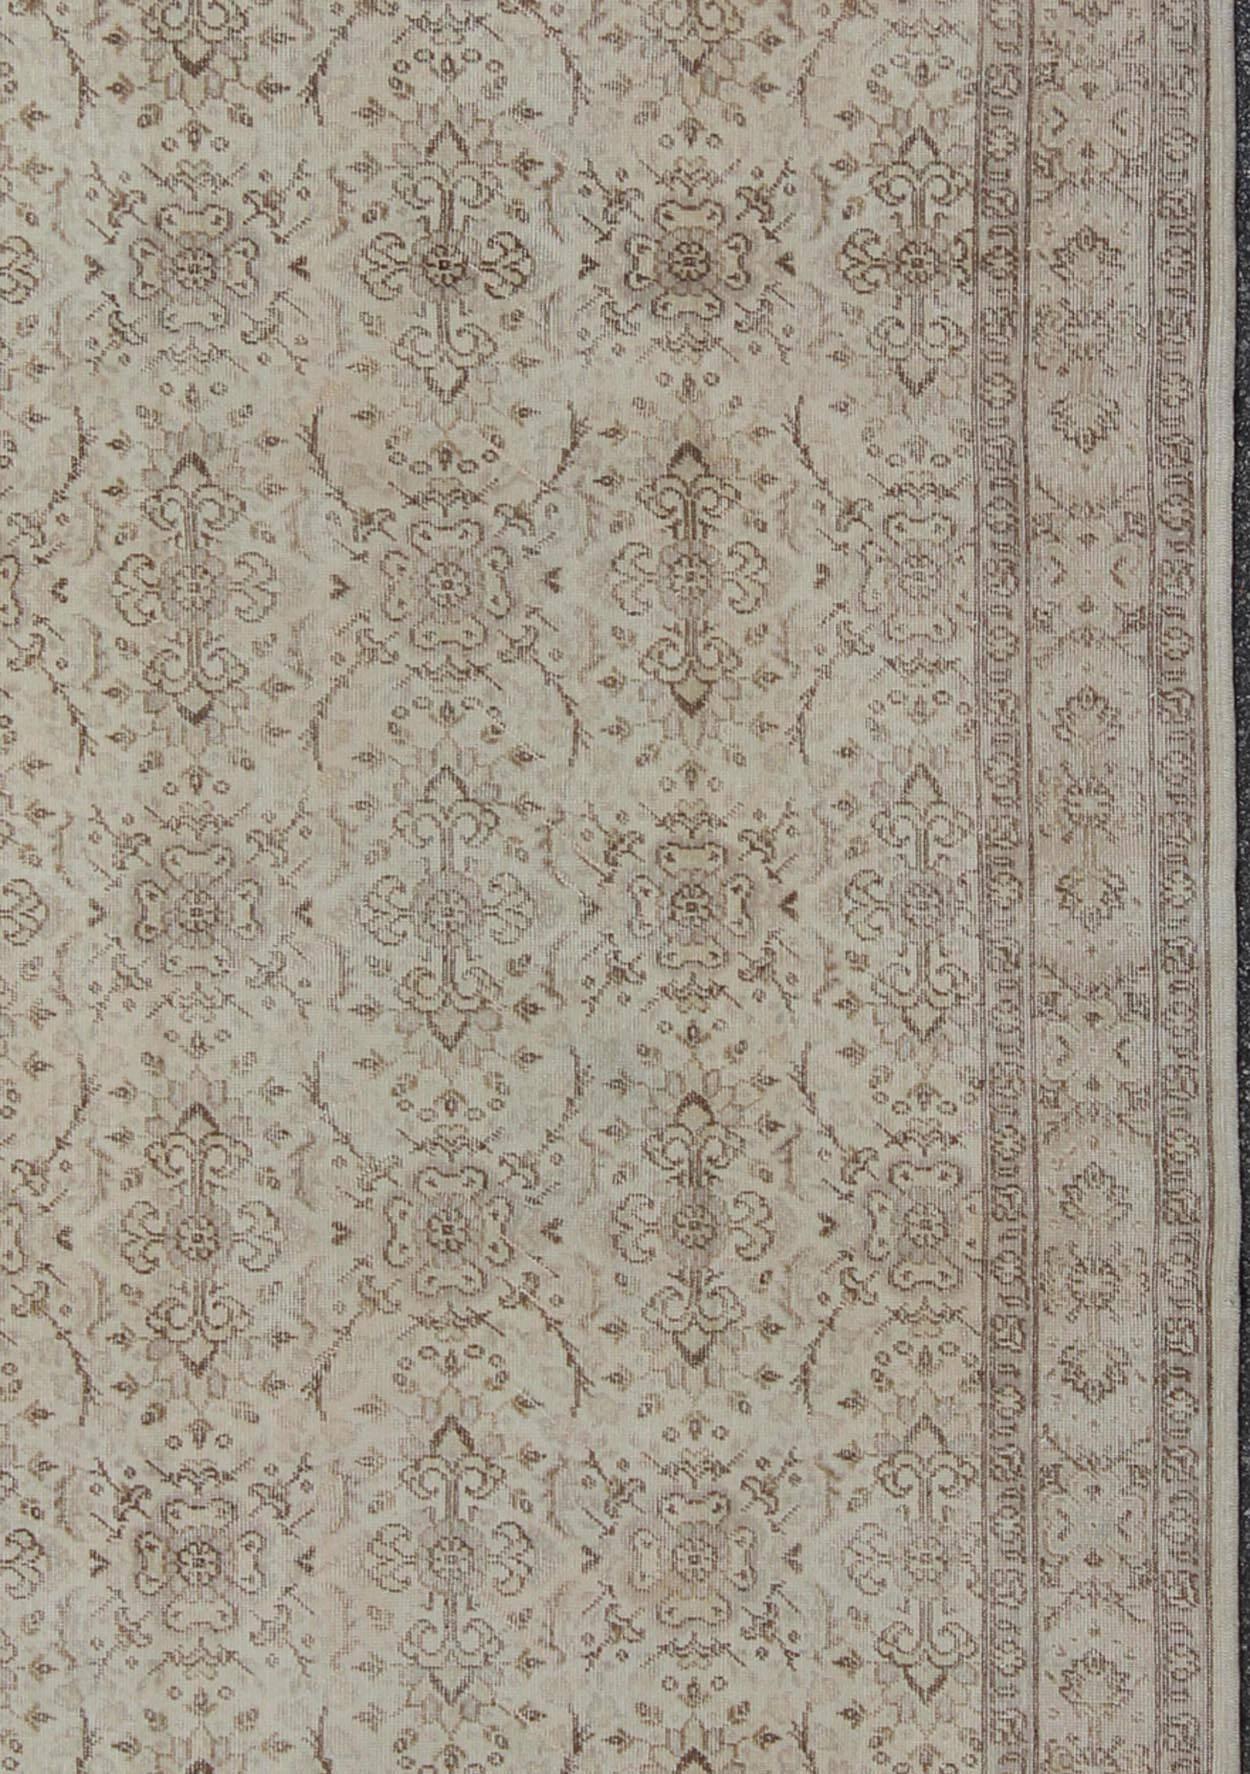 Vintage Turkish Oushak Carpet with Botanical Motifs Set on an Cream Ground In Good Condition For Sale In Atlanta, GA